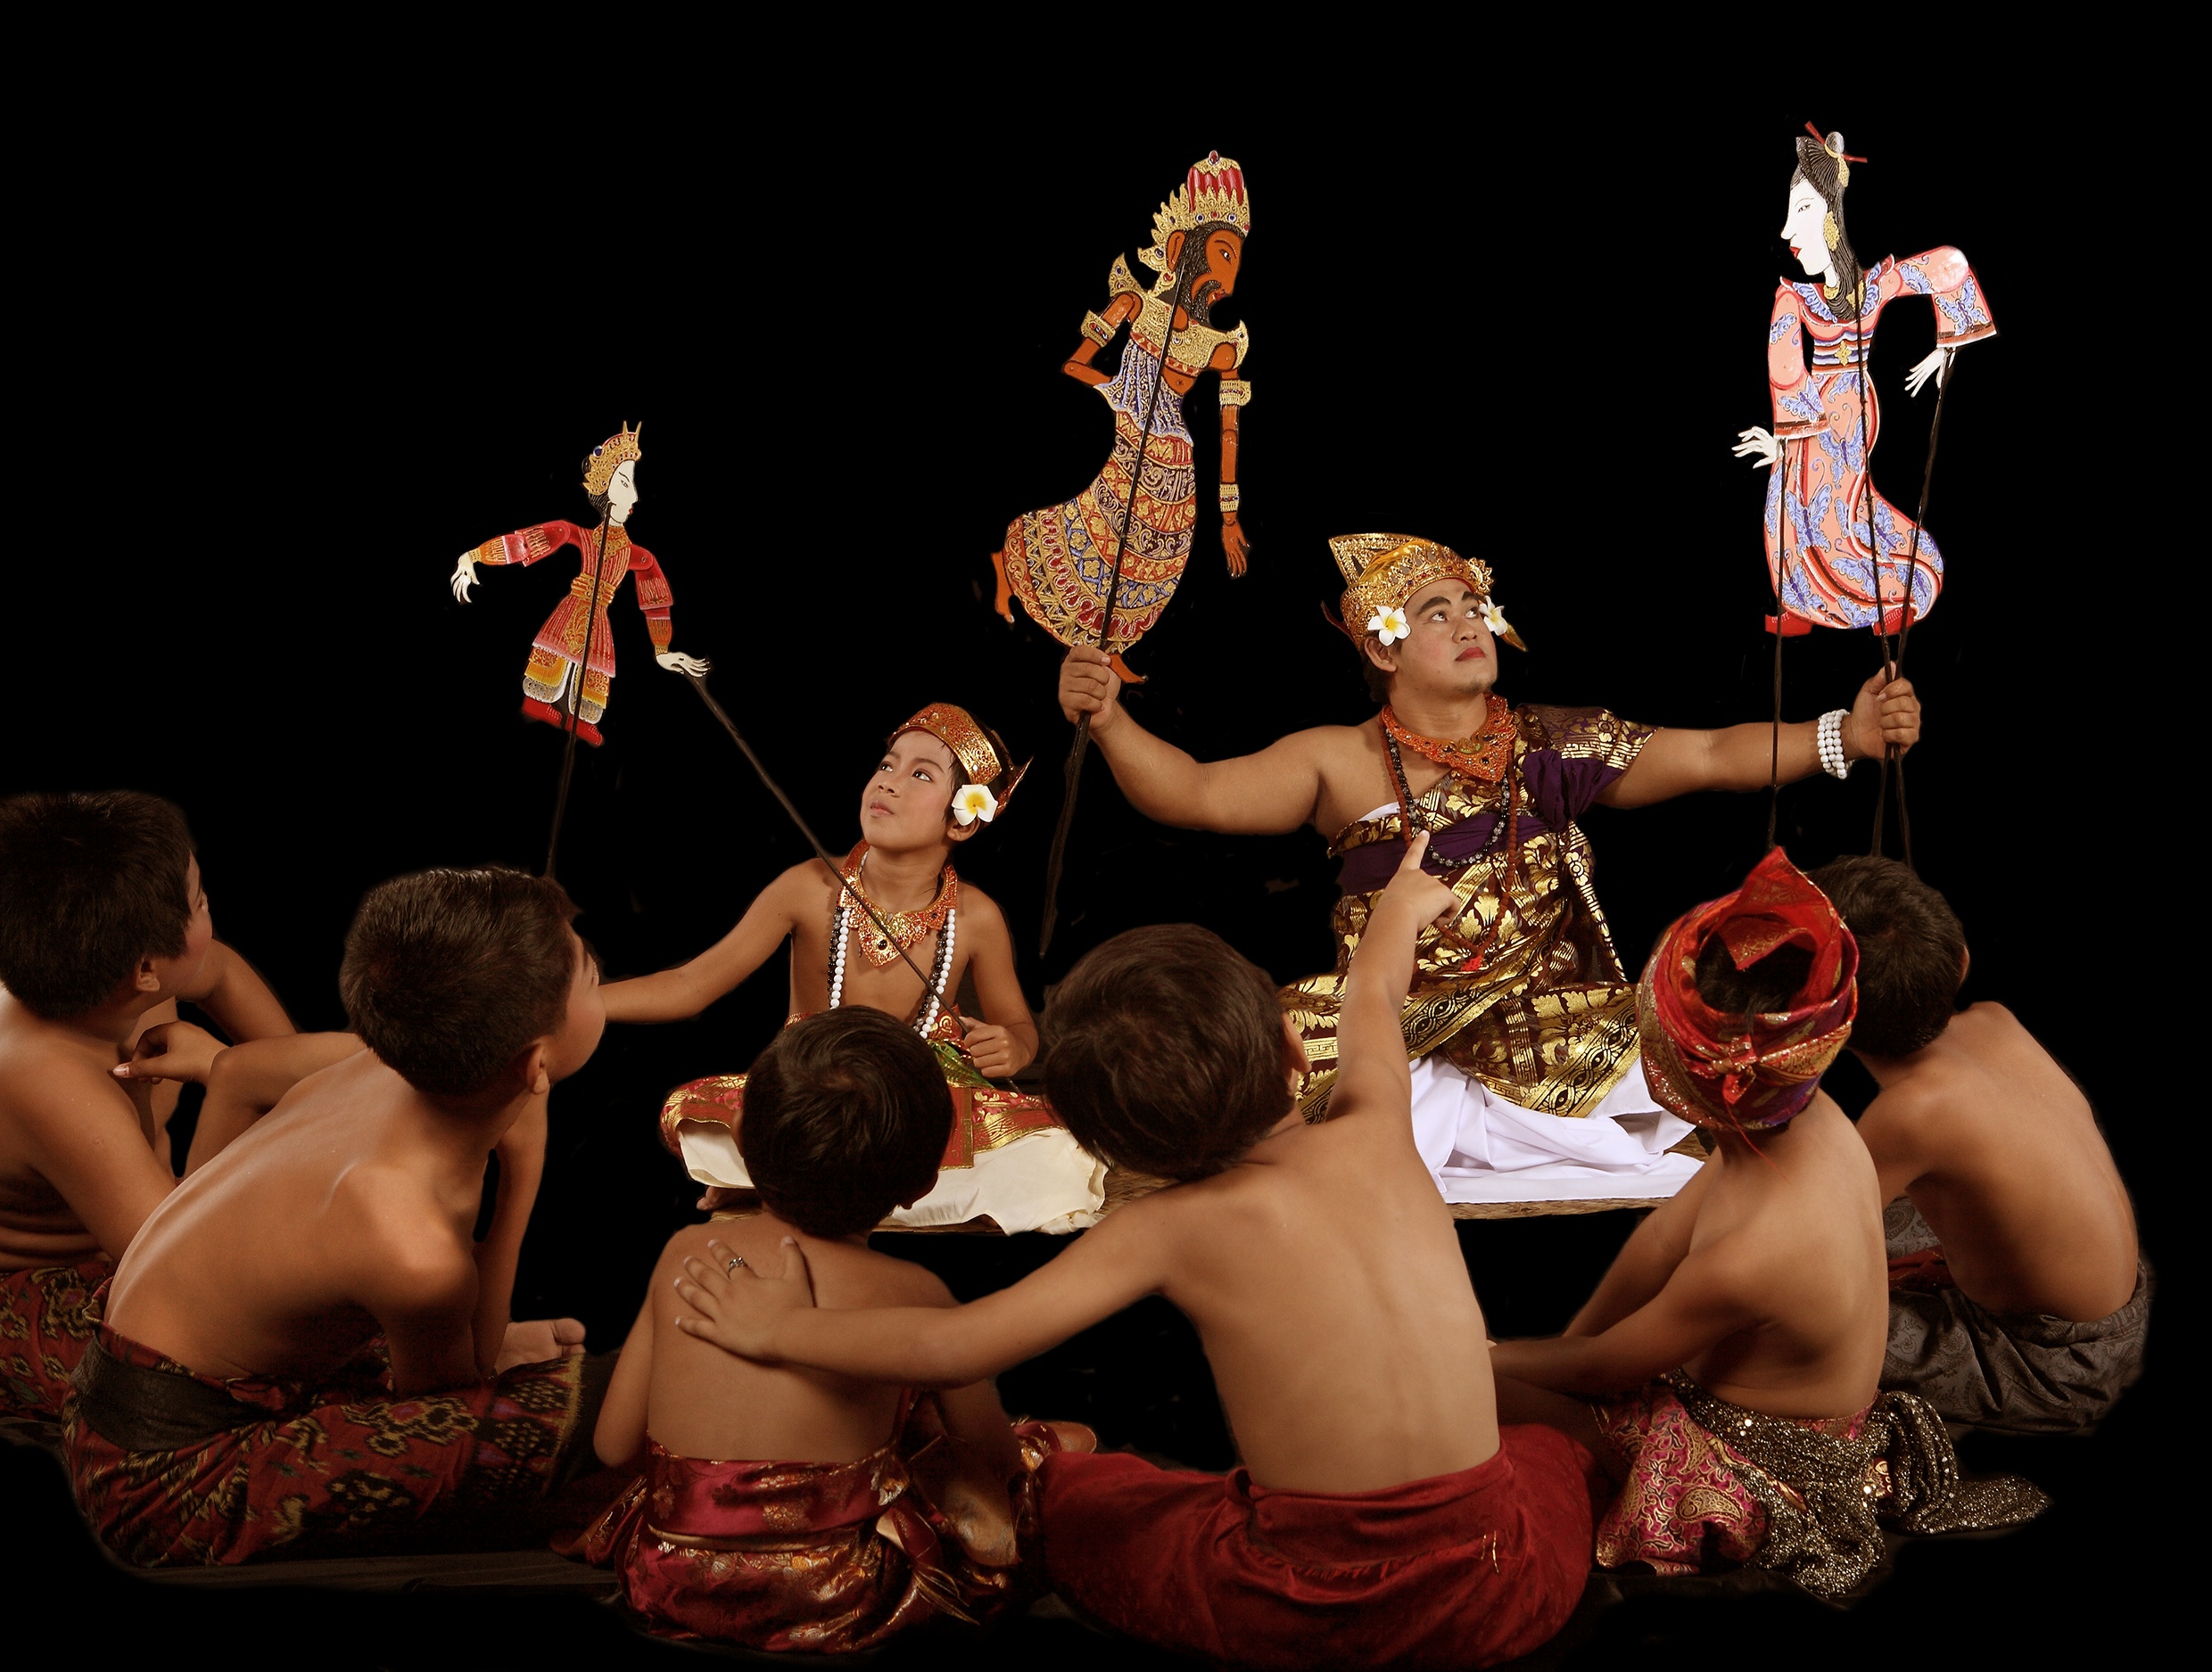 Bali Agung Show: A Spectacular Cultural Performance in Bali